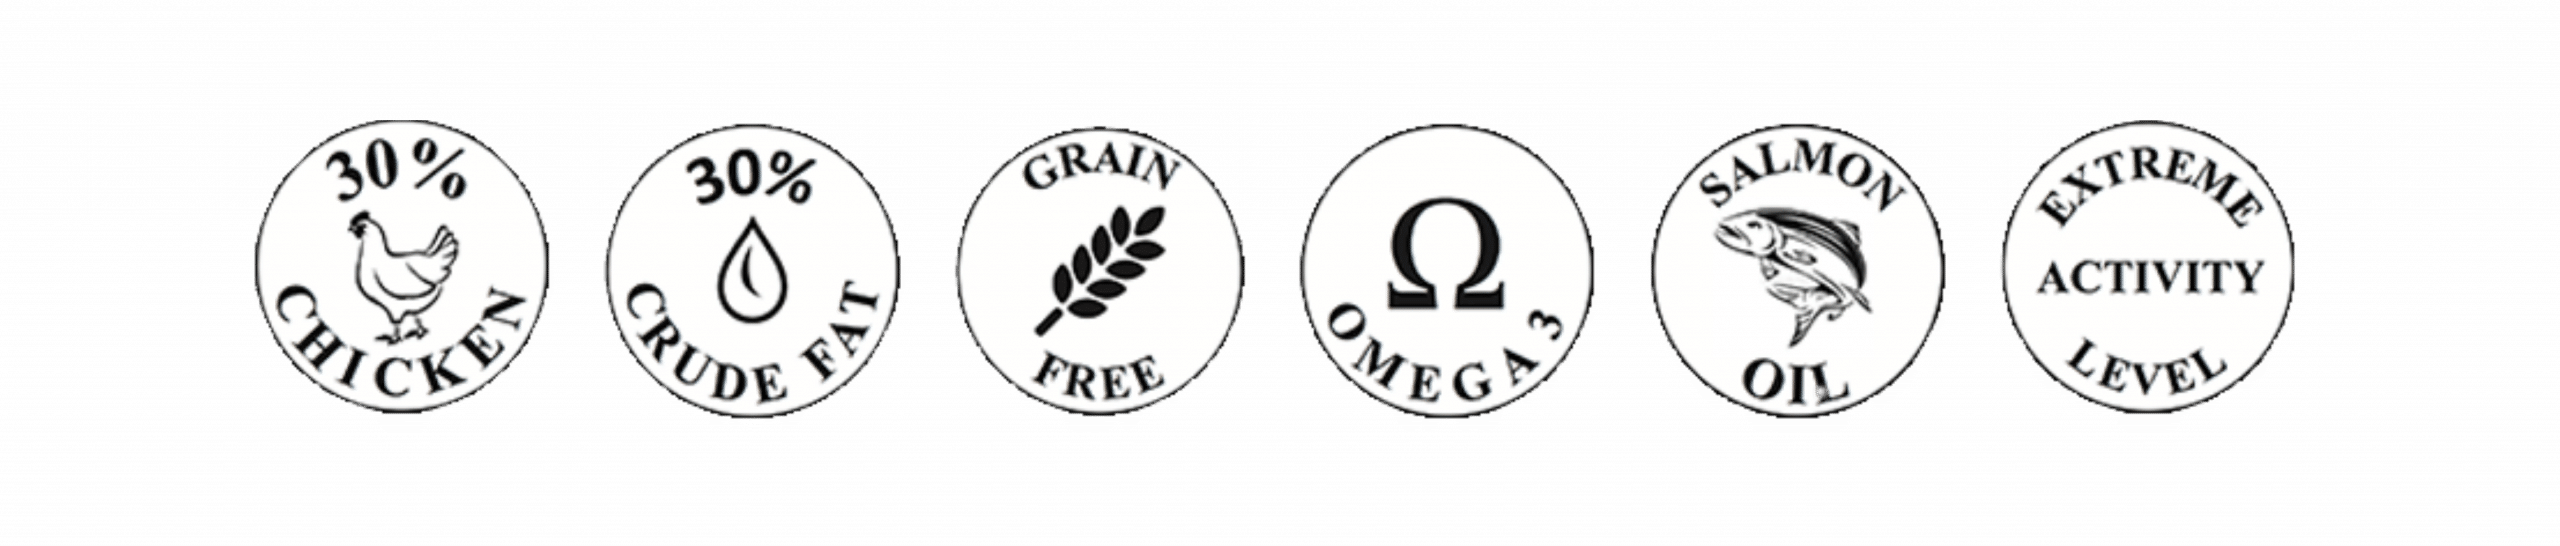 Grain-Free-31-30-Greenheart-Premiums